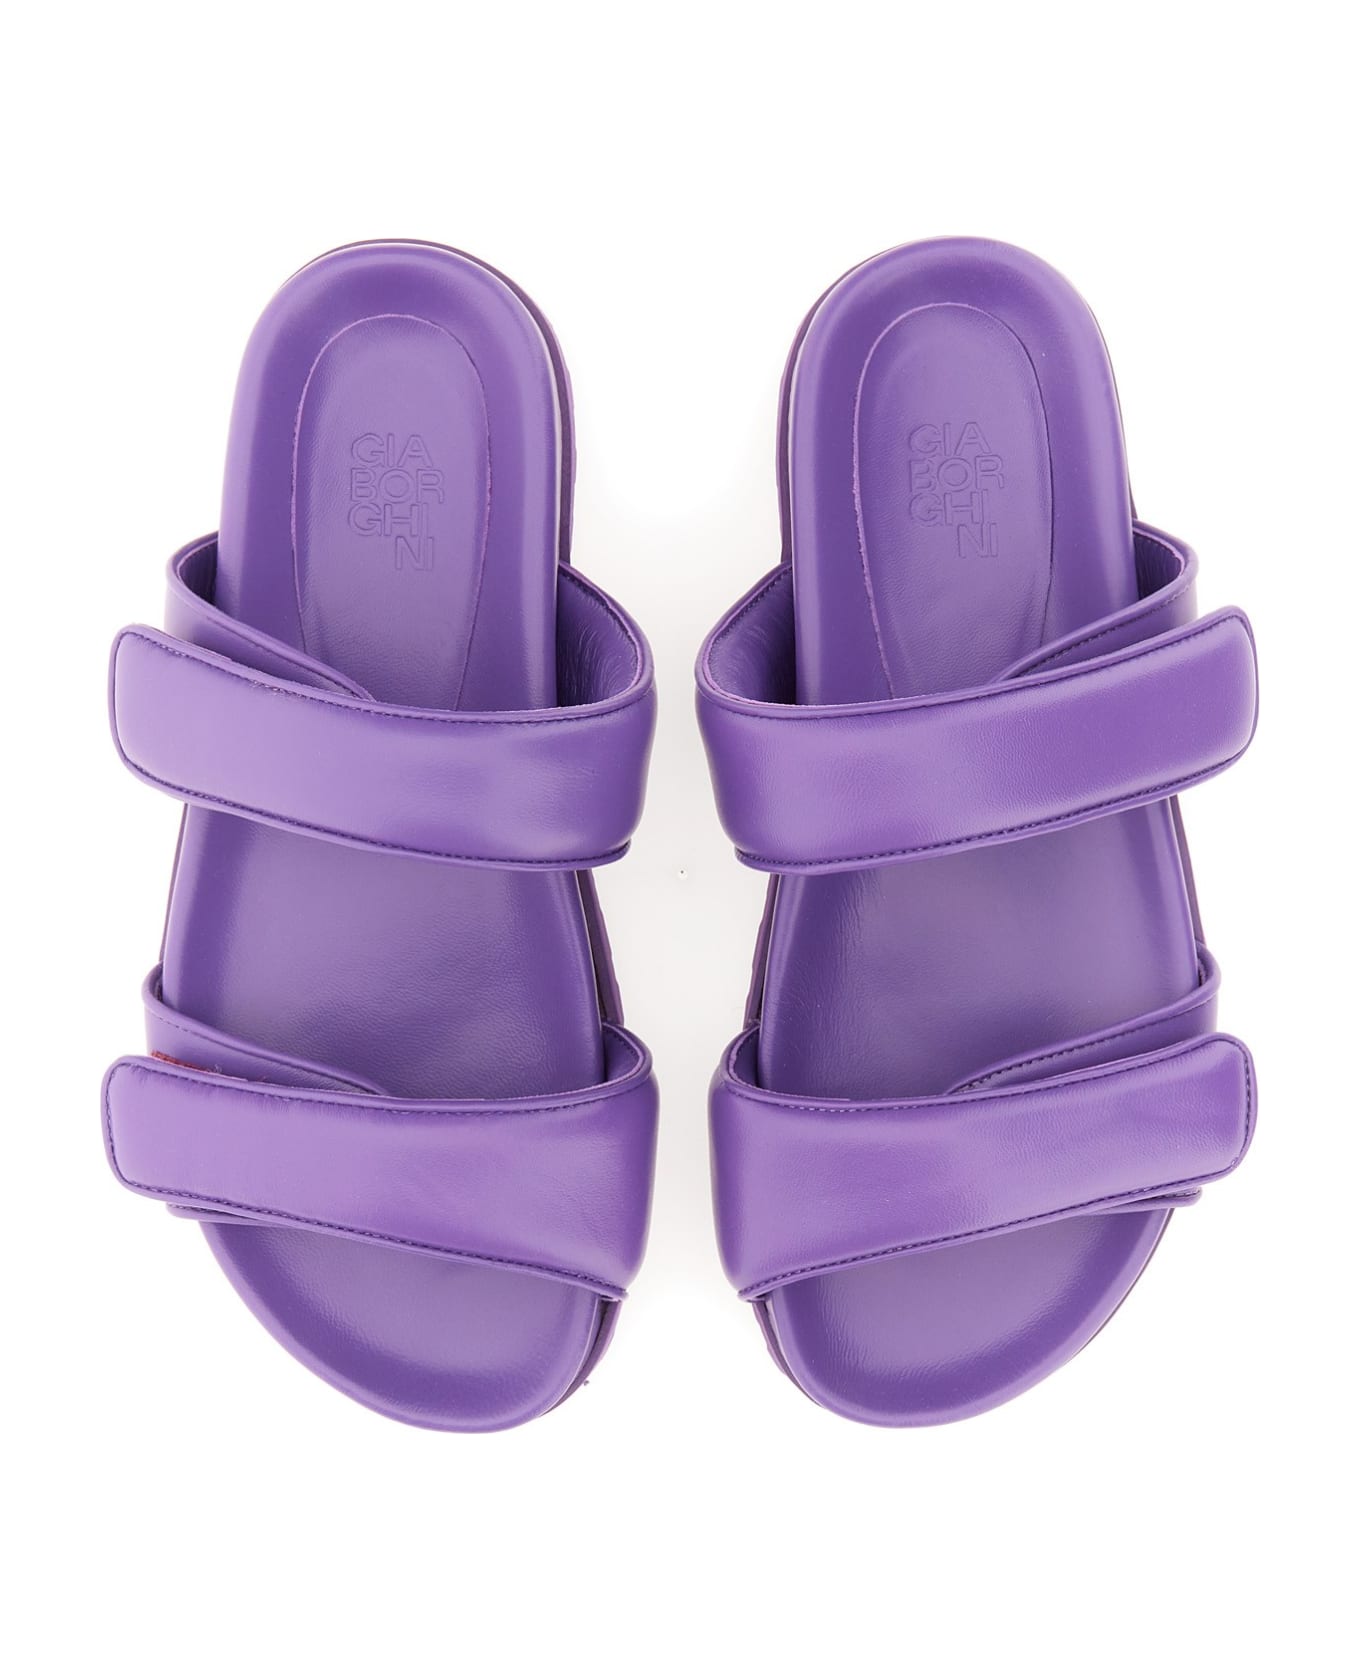 GIA BORGHINI Sandal Perni 11 Gia X Pernille Teisbaek - Purple サンダル